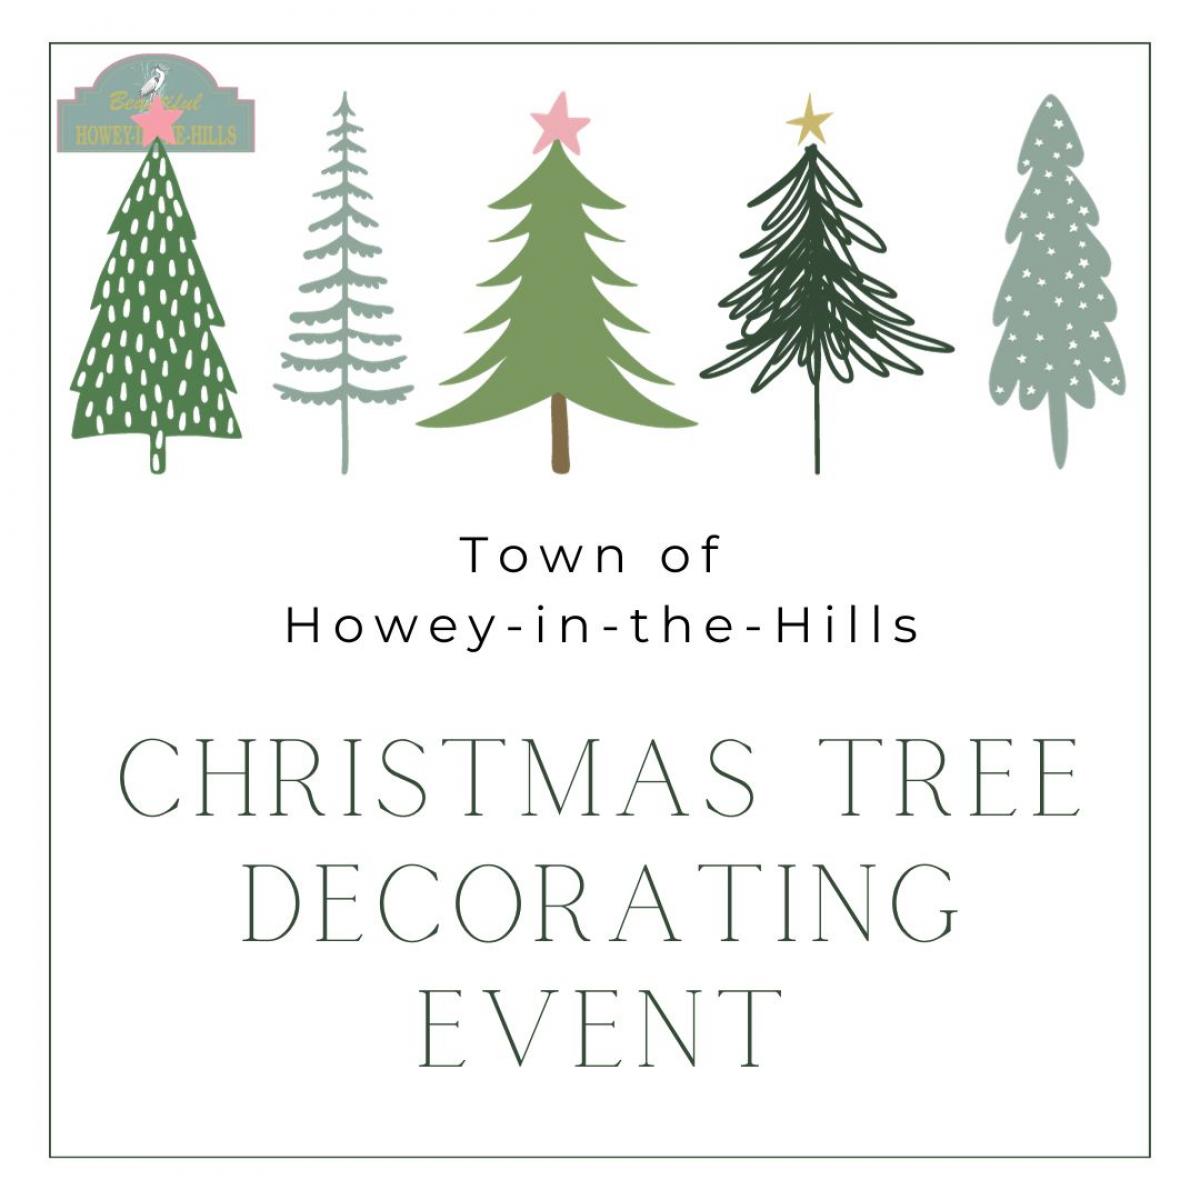 Sponsored Christmas Tree Decorating Event